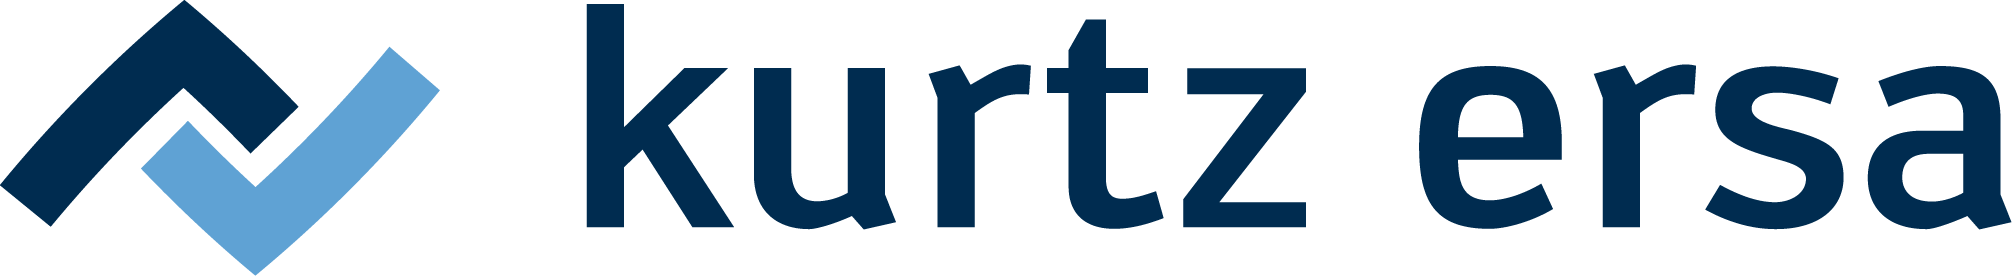 Ersa Logo